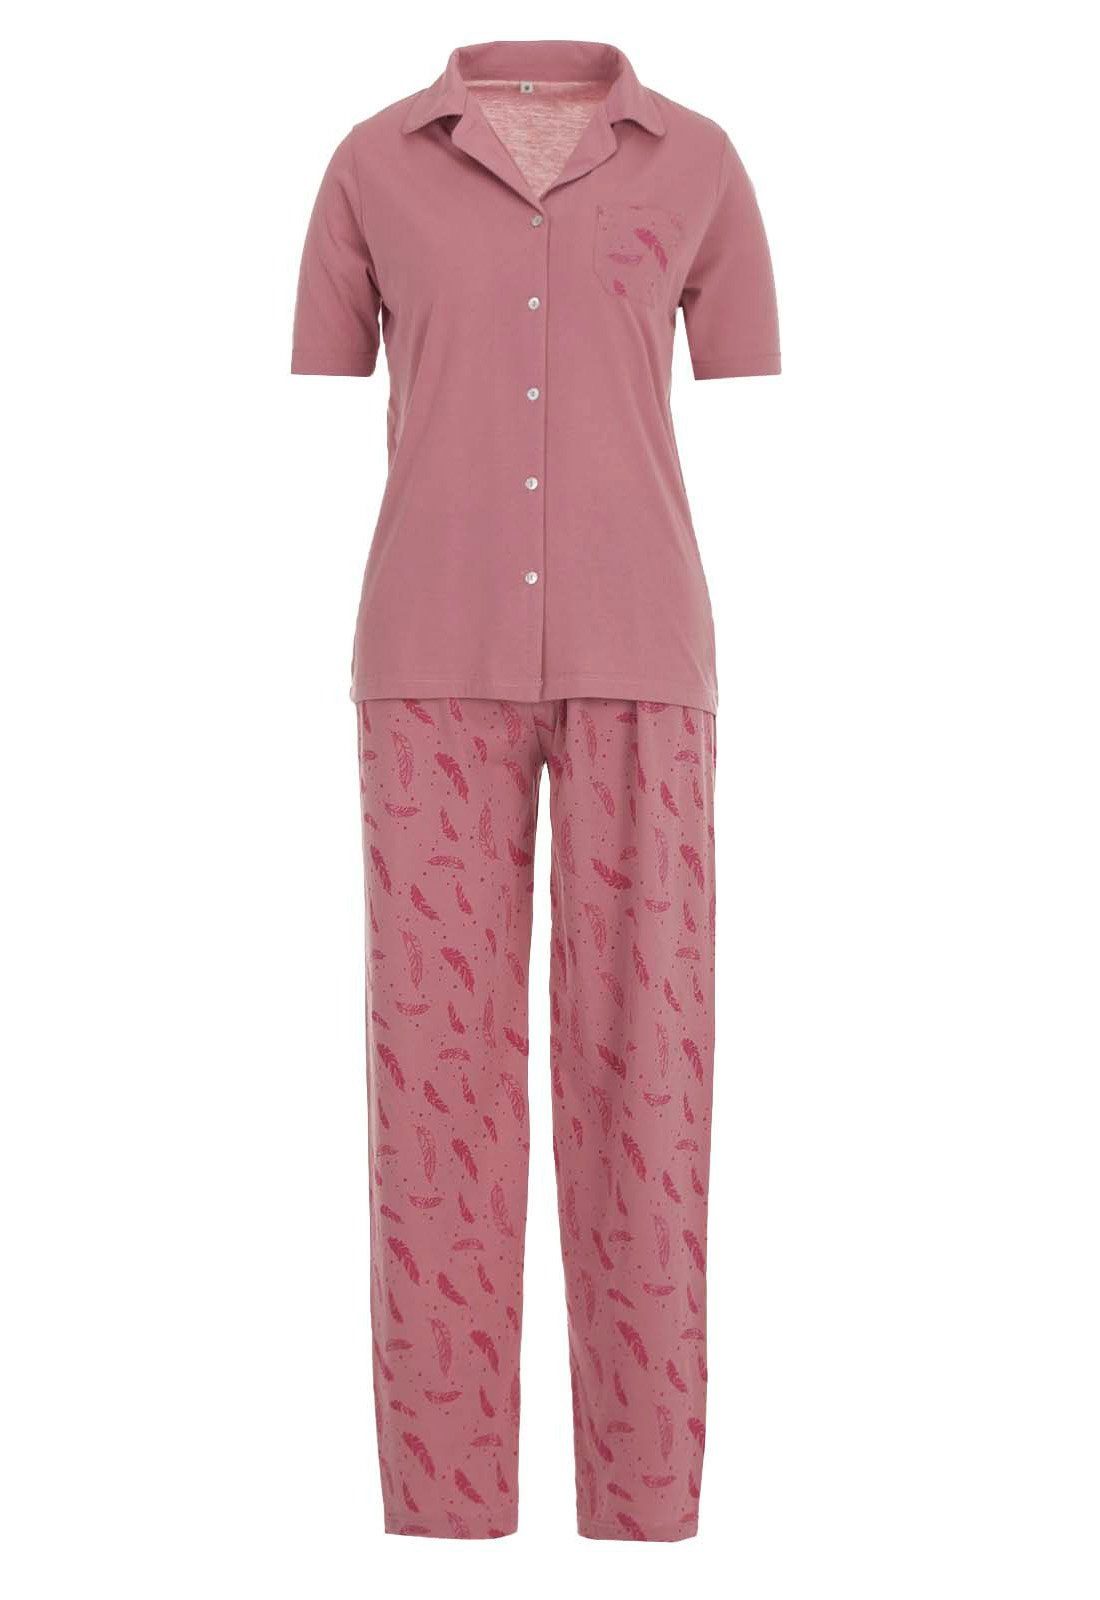 zeitlos Schlafanzug Pyjama Set Kurzarm - Feder